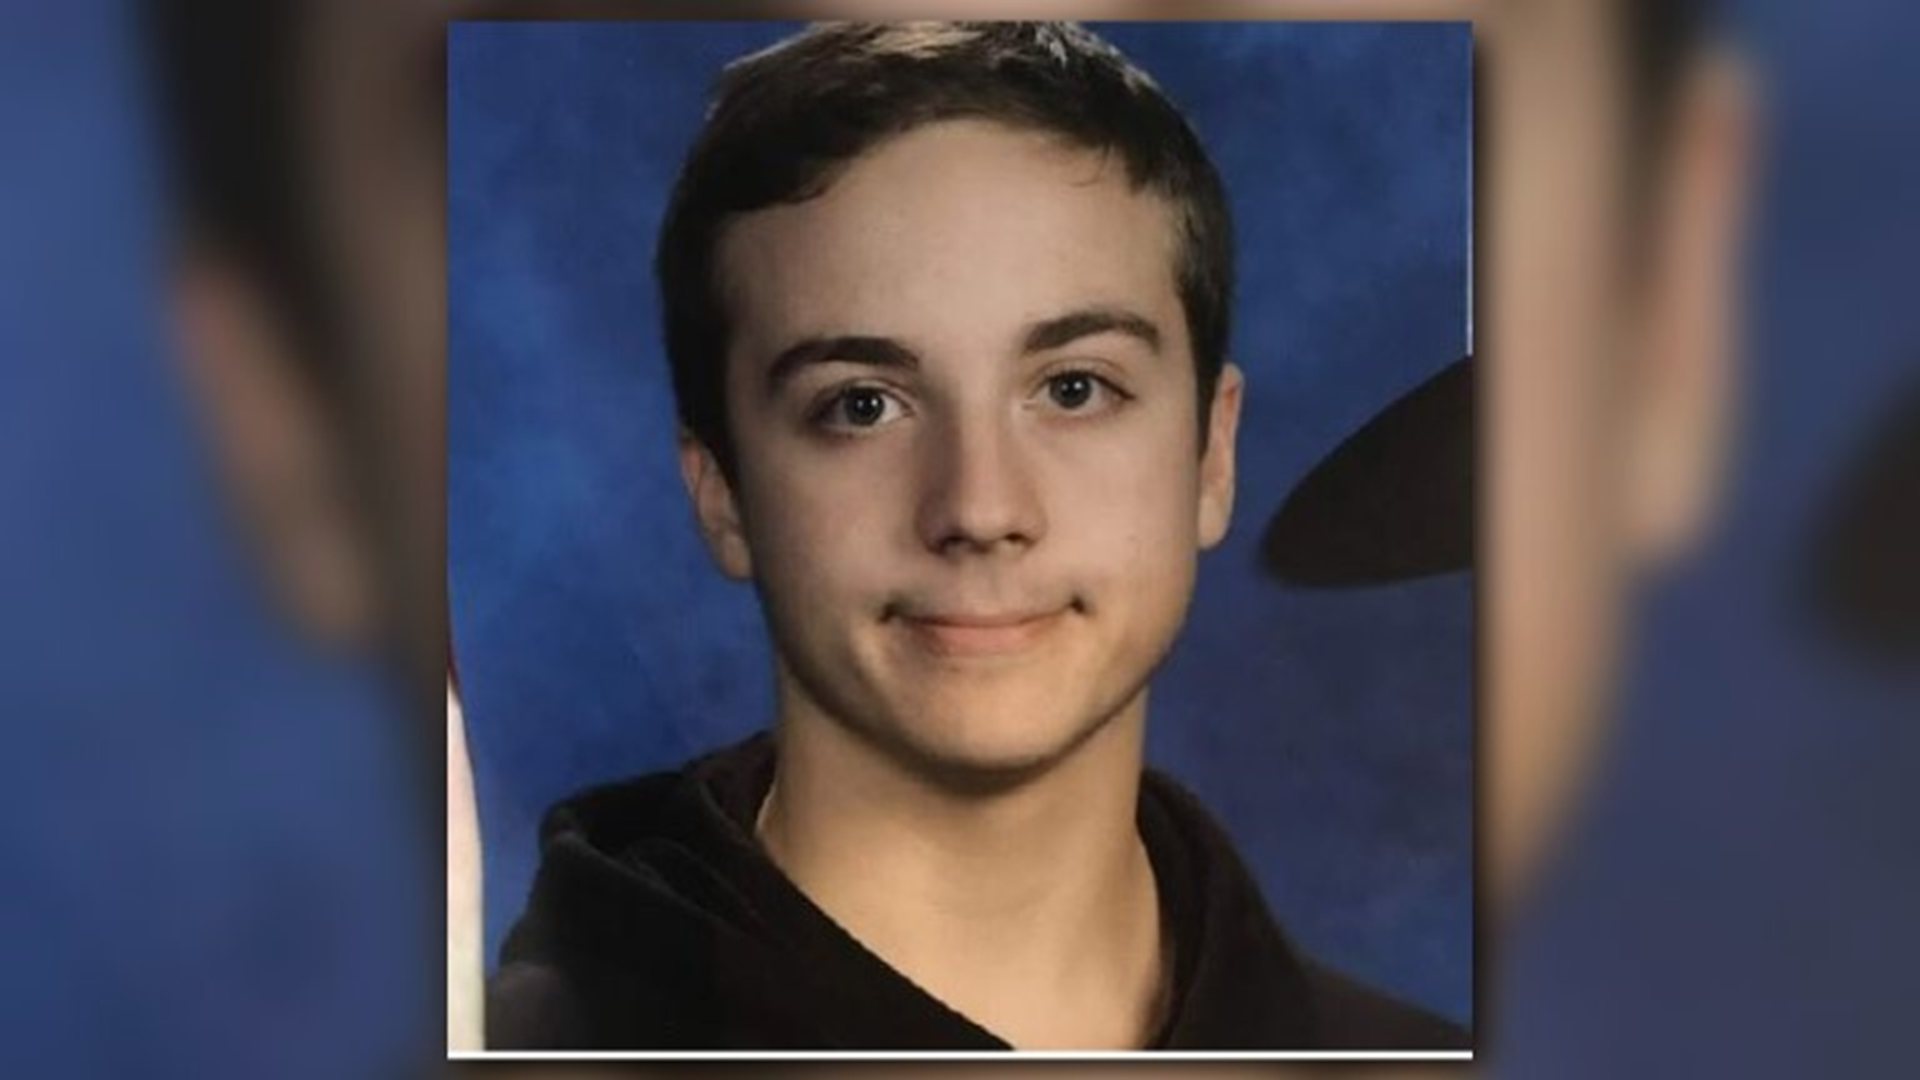 Missing Rochester teen found